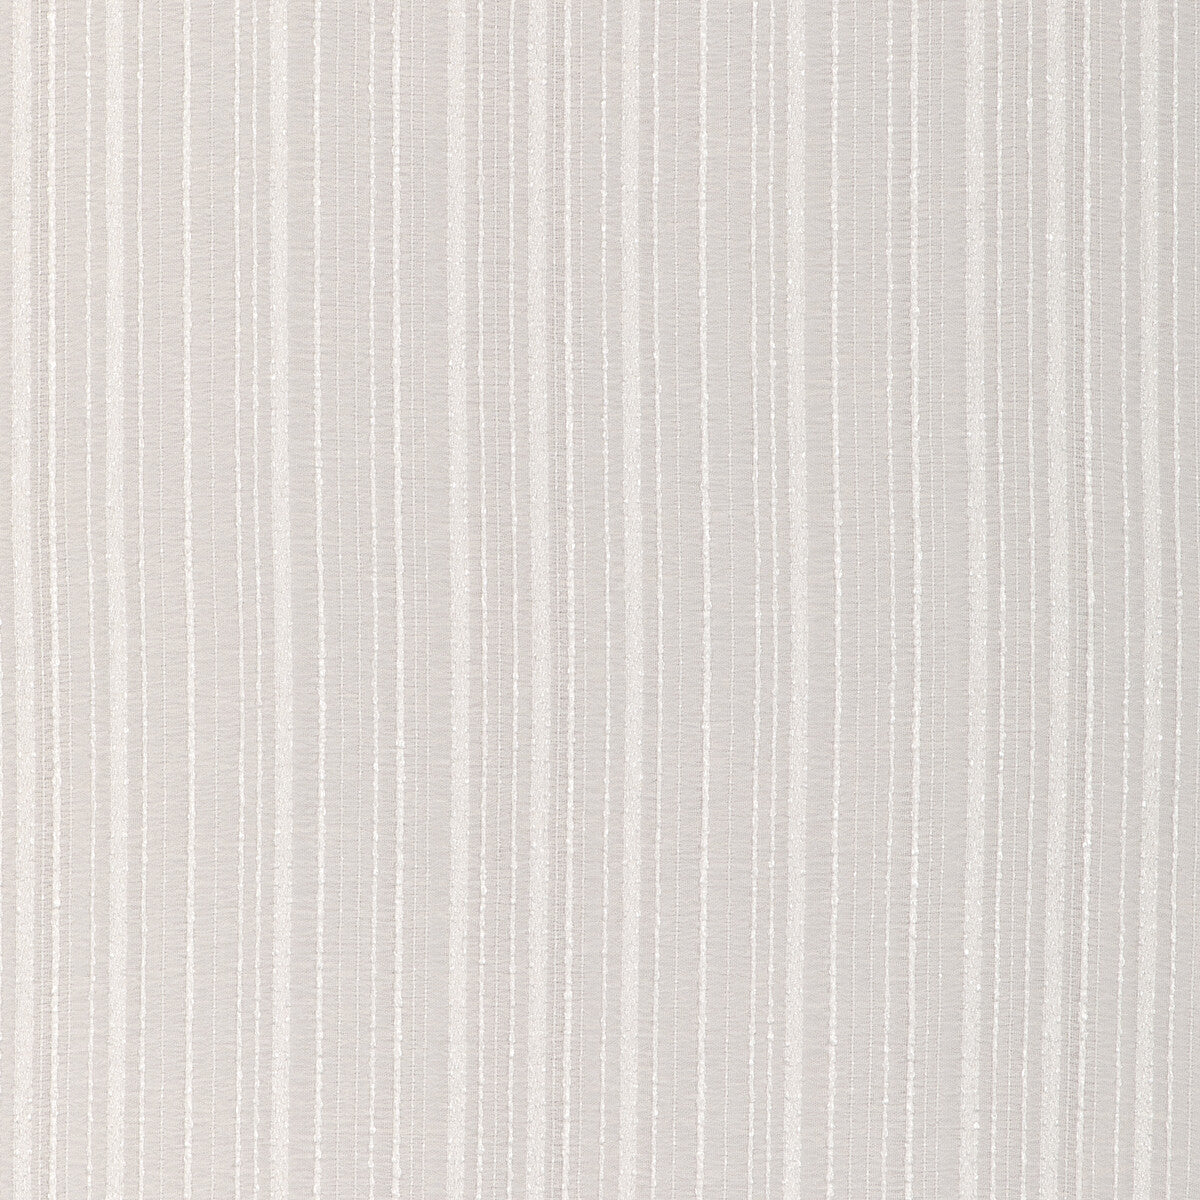 Kravet Basics fabric in 90023-1 color - pattern 90023.1.0 - by Kravet Basics in the Sheer Outlook collection